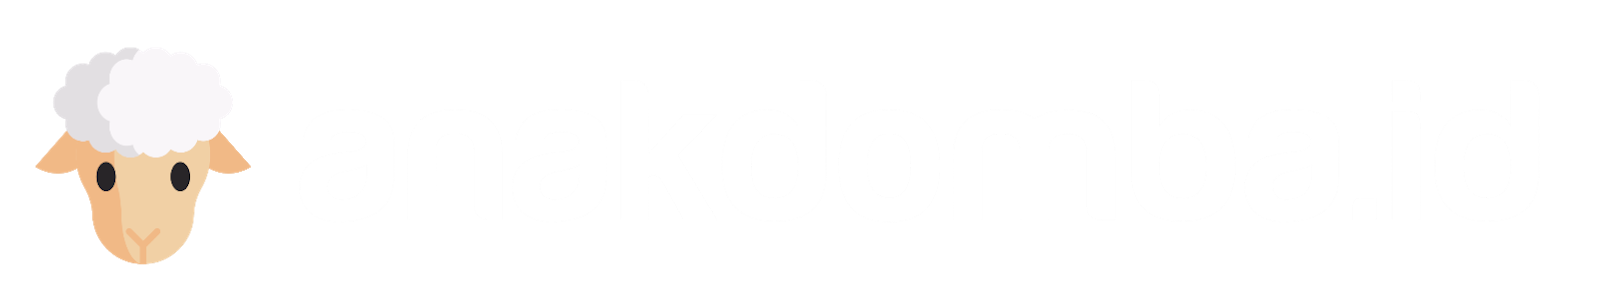 anakdomba.id - Blog Game, Internet dan Teknologi